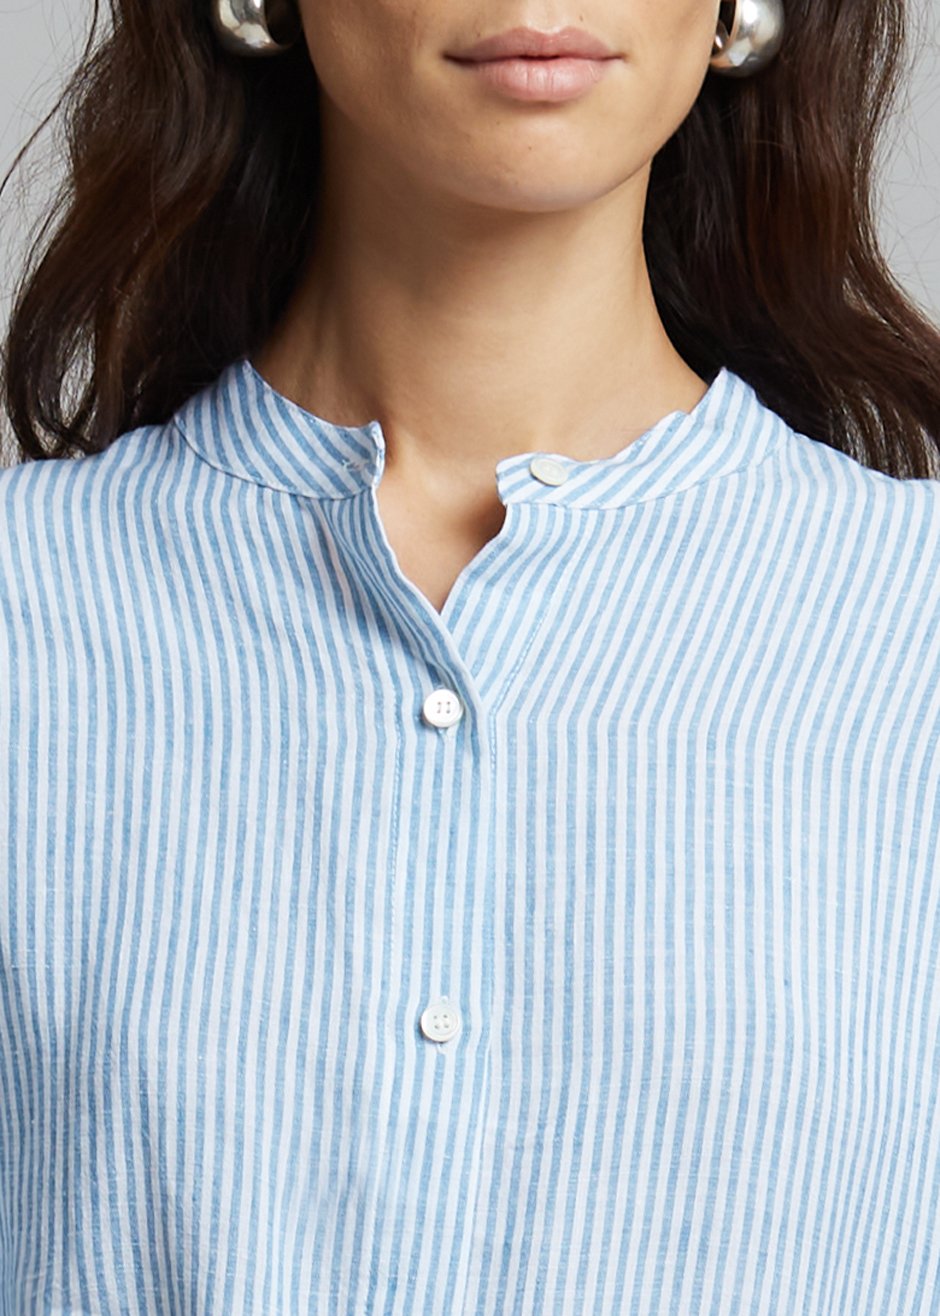 Malin Shirt Dress - Blue/White Stripe - 6